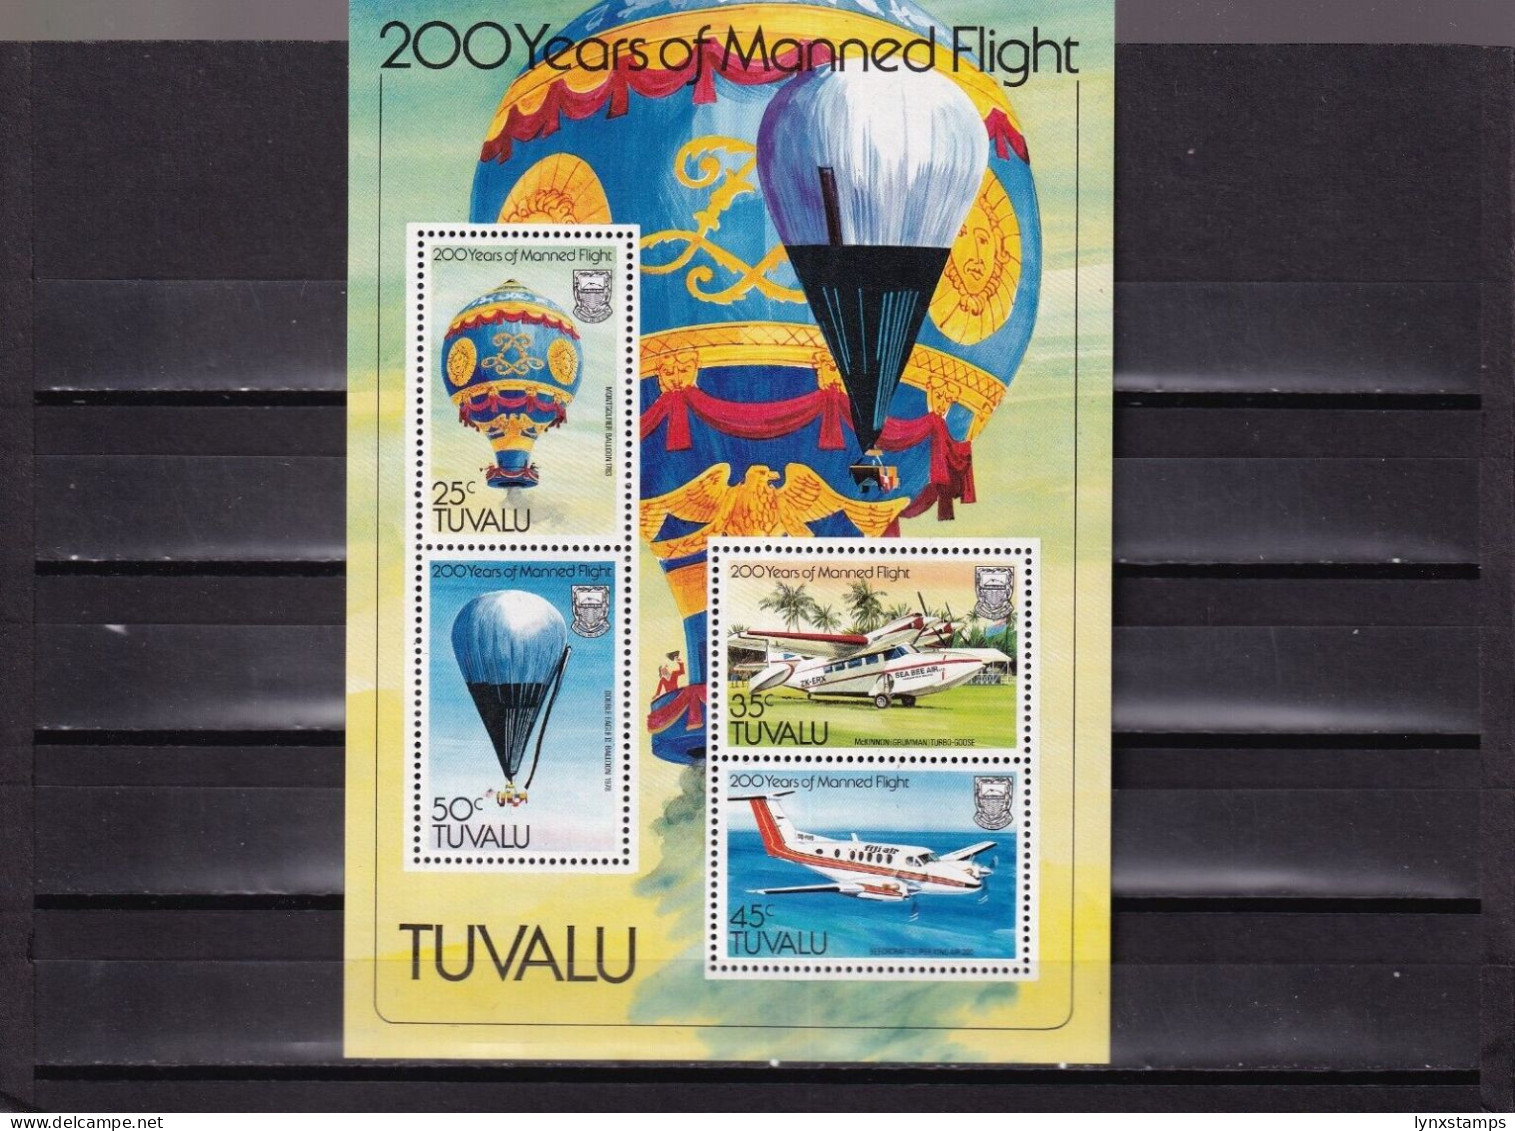 ER04 Tuvalu 1983 200 Years Of Manned Flight MNH Souvenir Sheet - Tuvalu